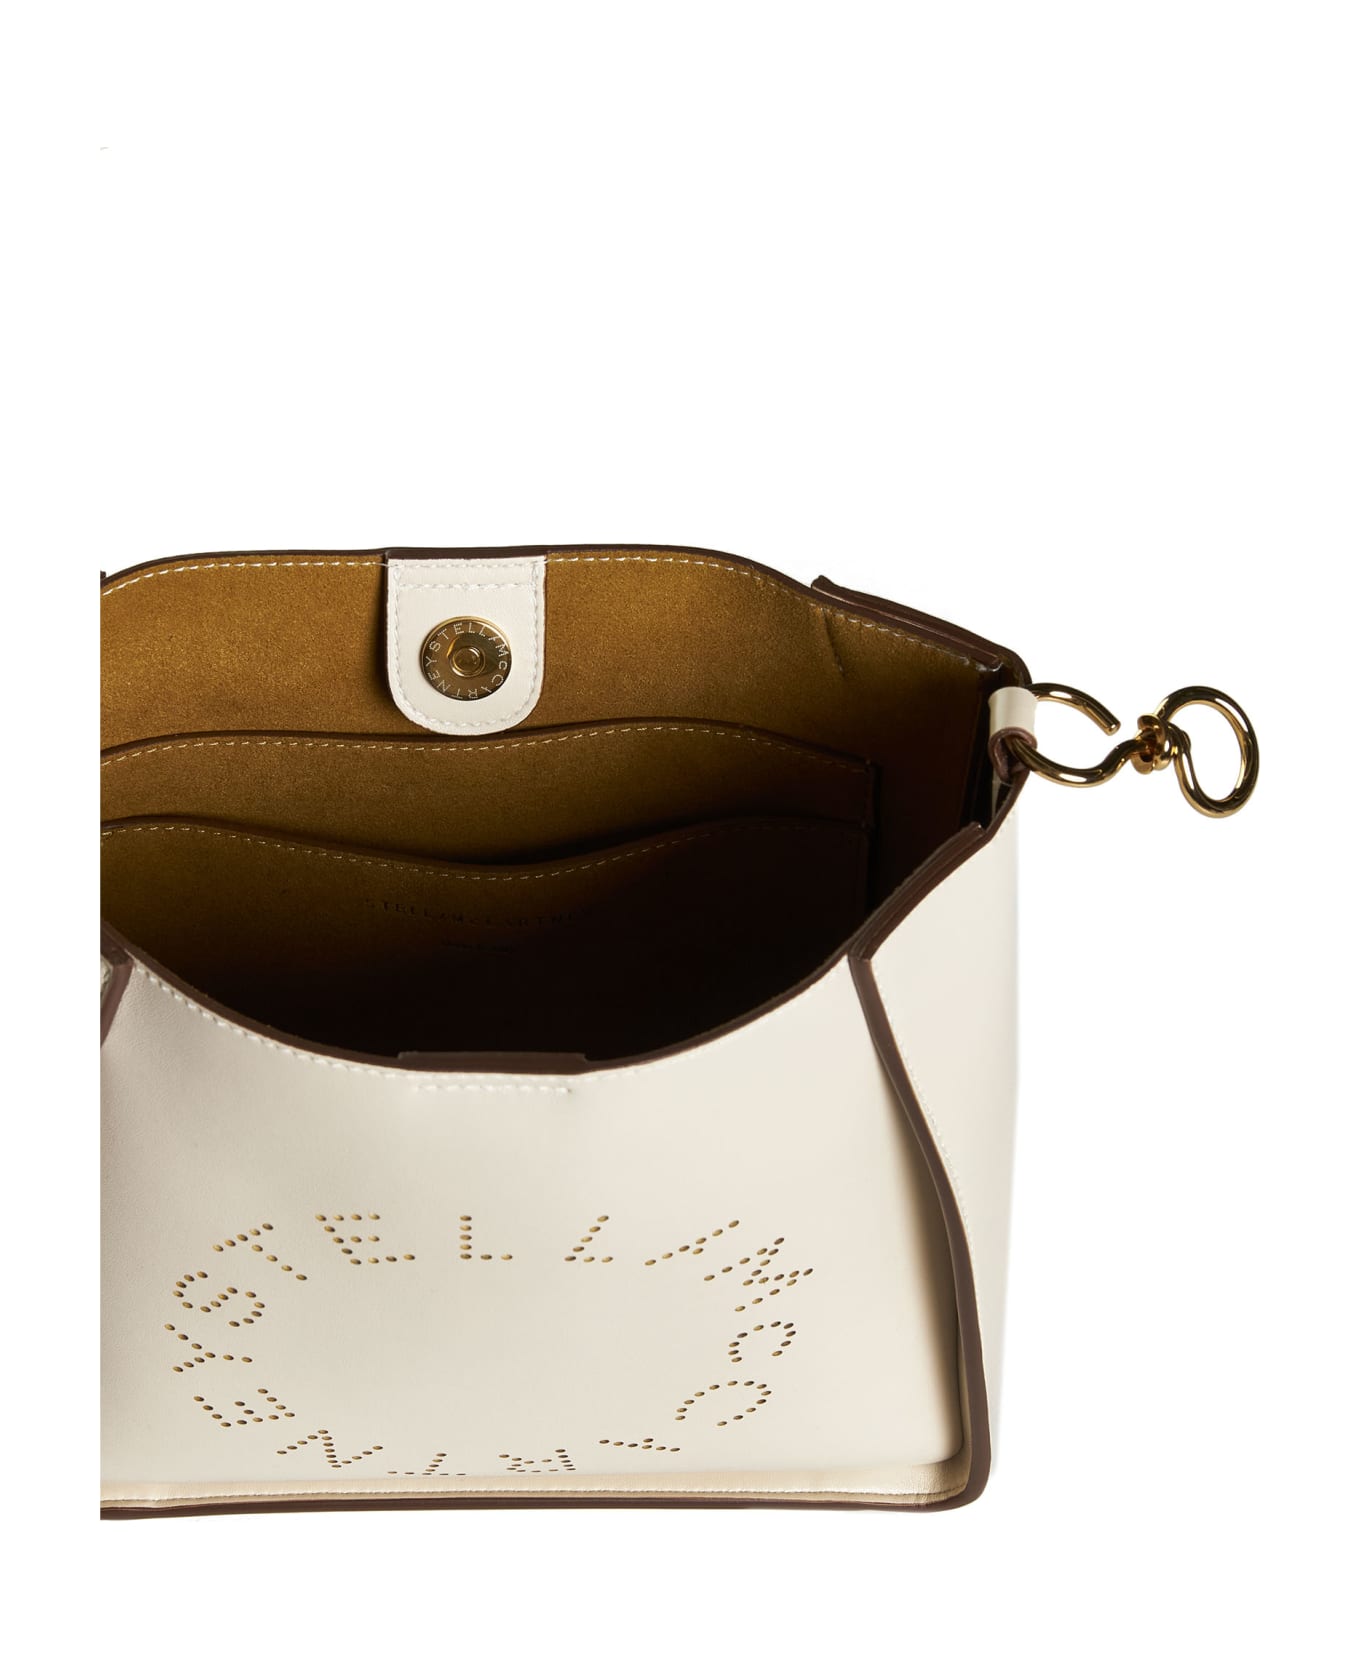 Stella McCartney Stella Perforated Logo Shoulder Bag - Pure white トートバッグ